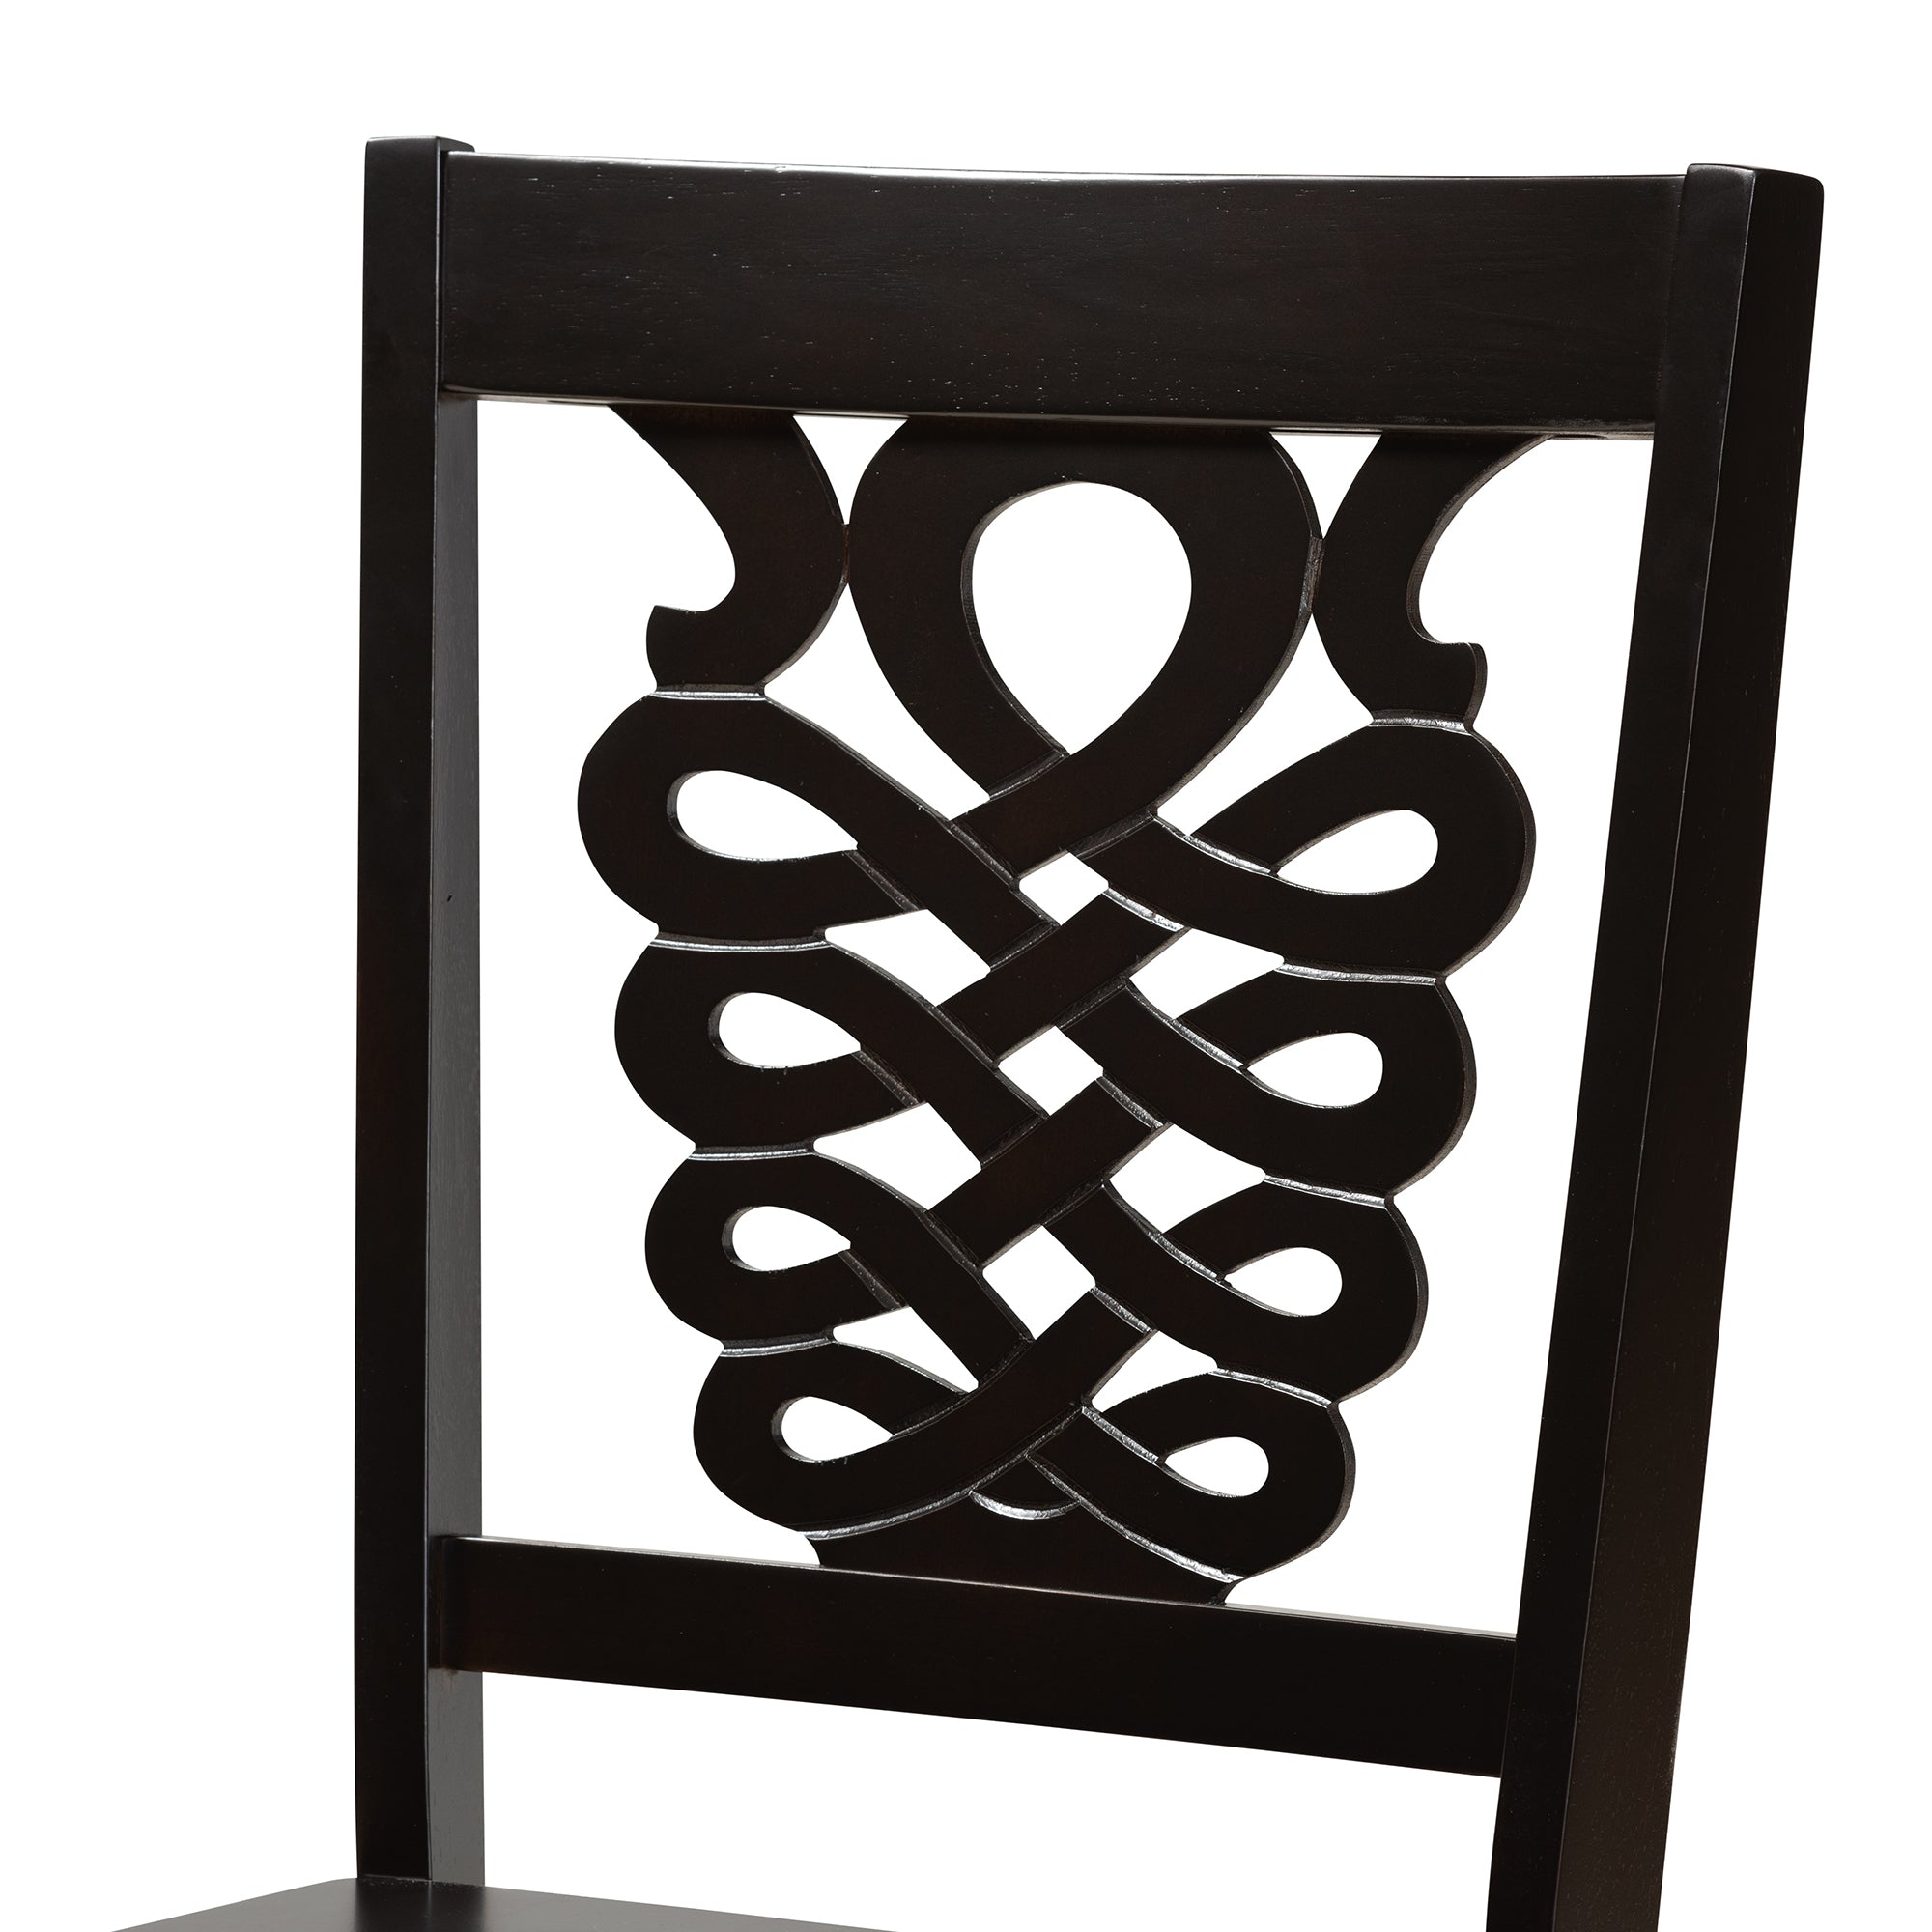 Salida Modern Table & Dining Chairs 5-Piece-Dining Set-Baxton Studio - WI-Wall2Wall Furnishings